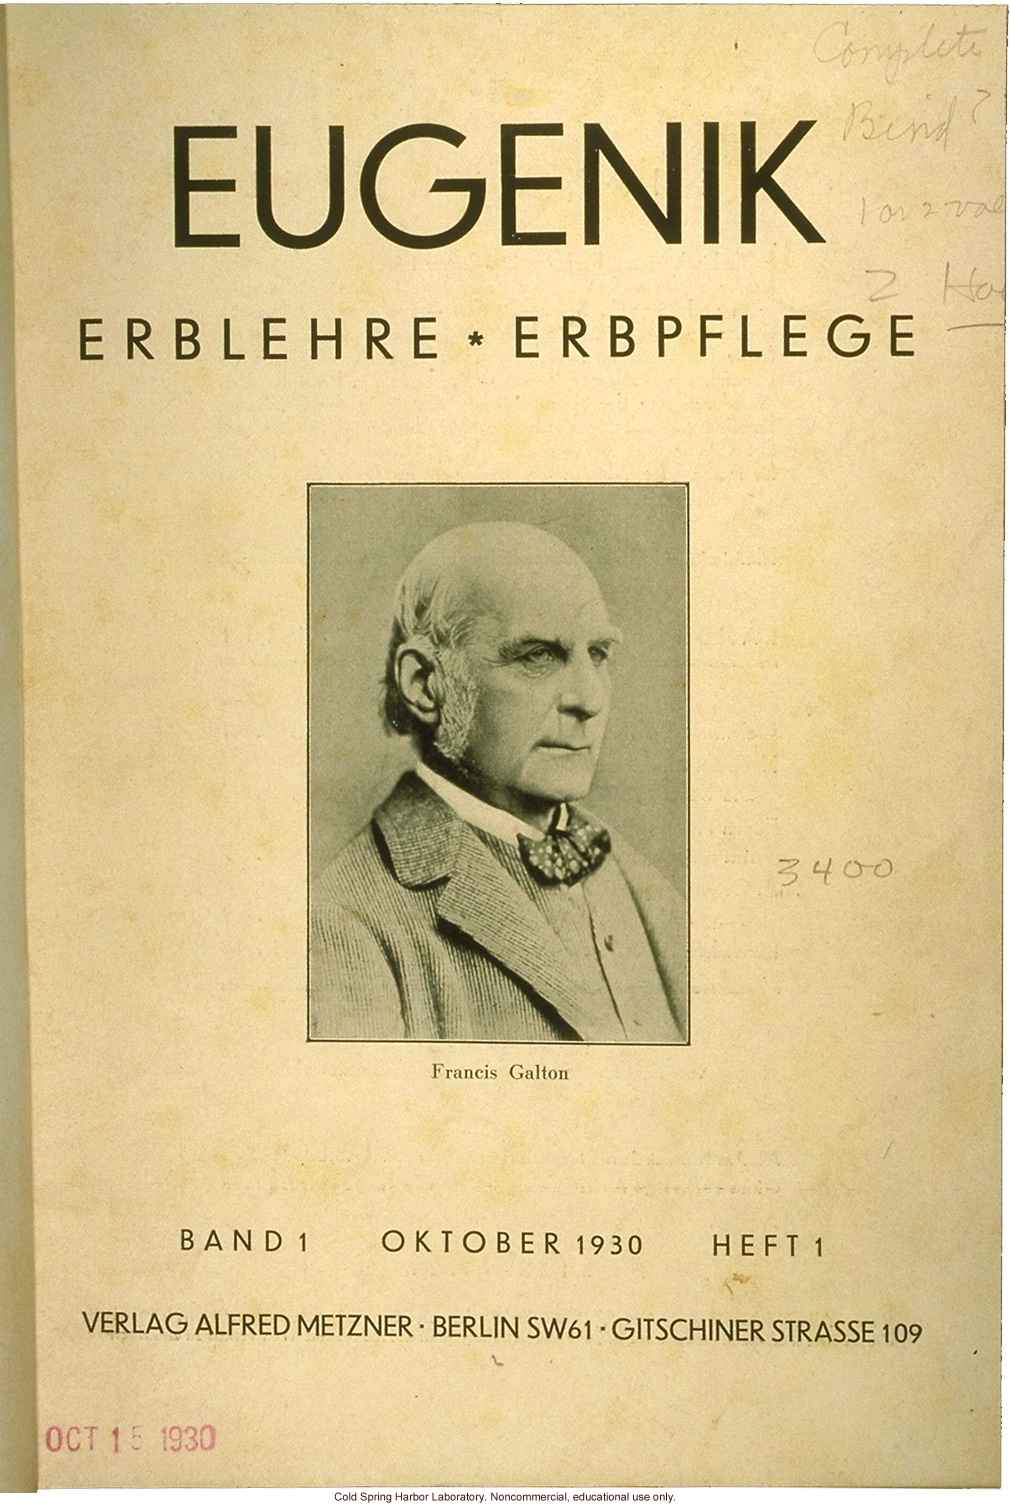 Eugenik: Erblehre, erbpflege (Eugenics: Hereditary teaching, preservation), October 1930